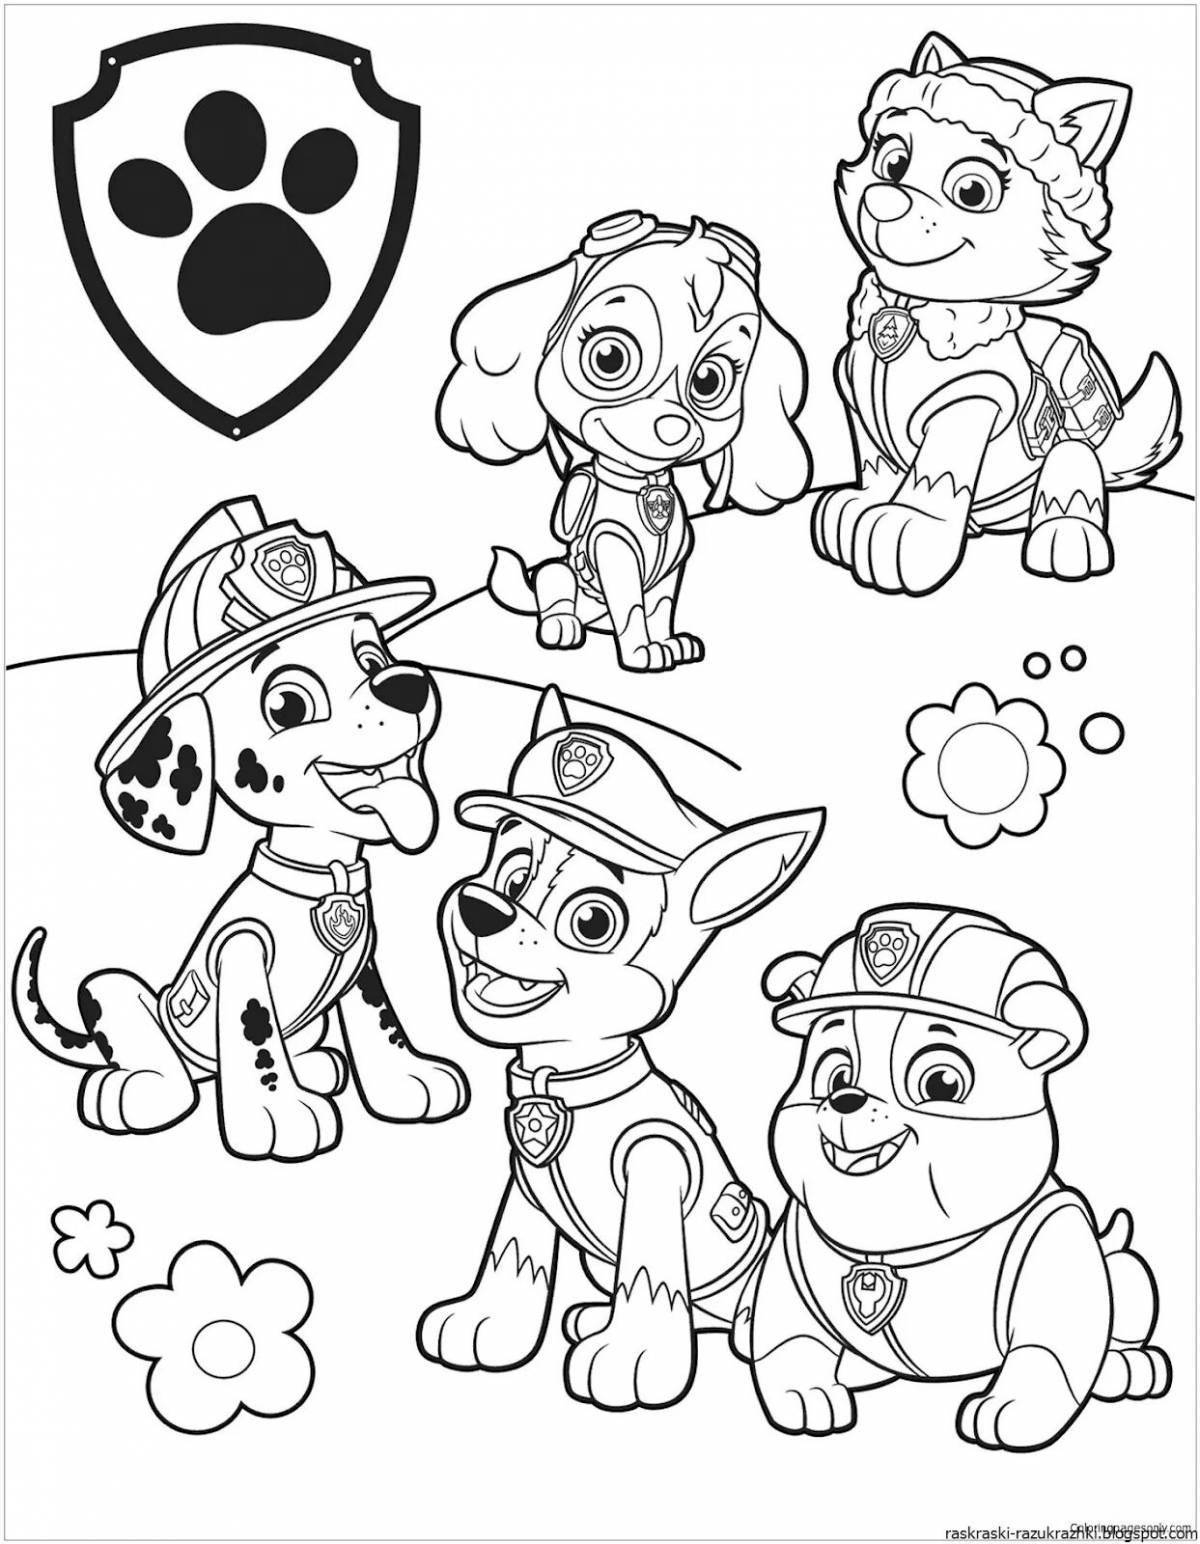 Cute cute paw patrol coloring book